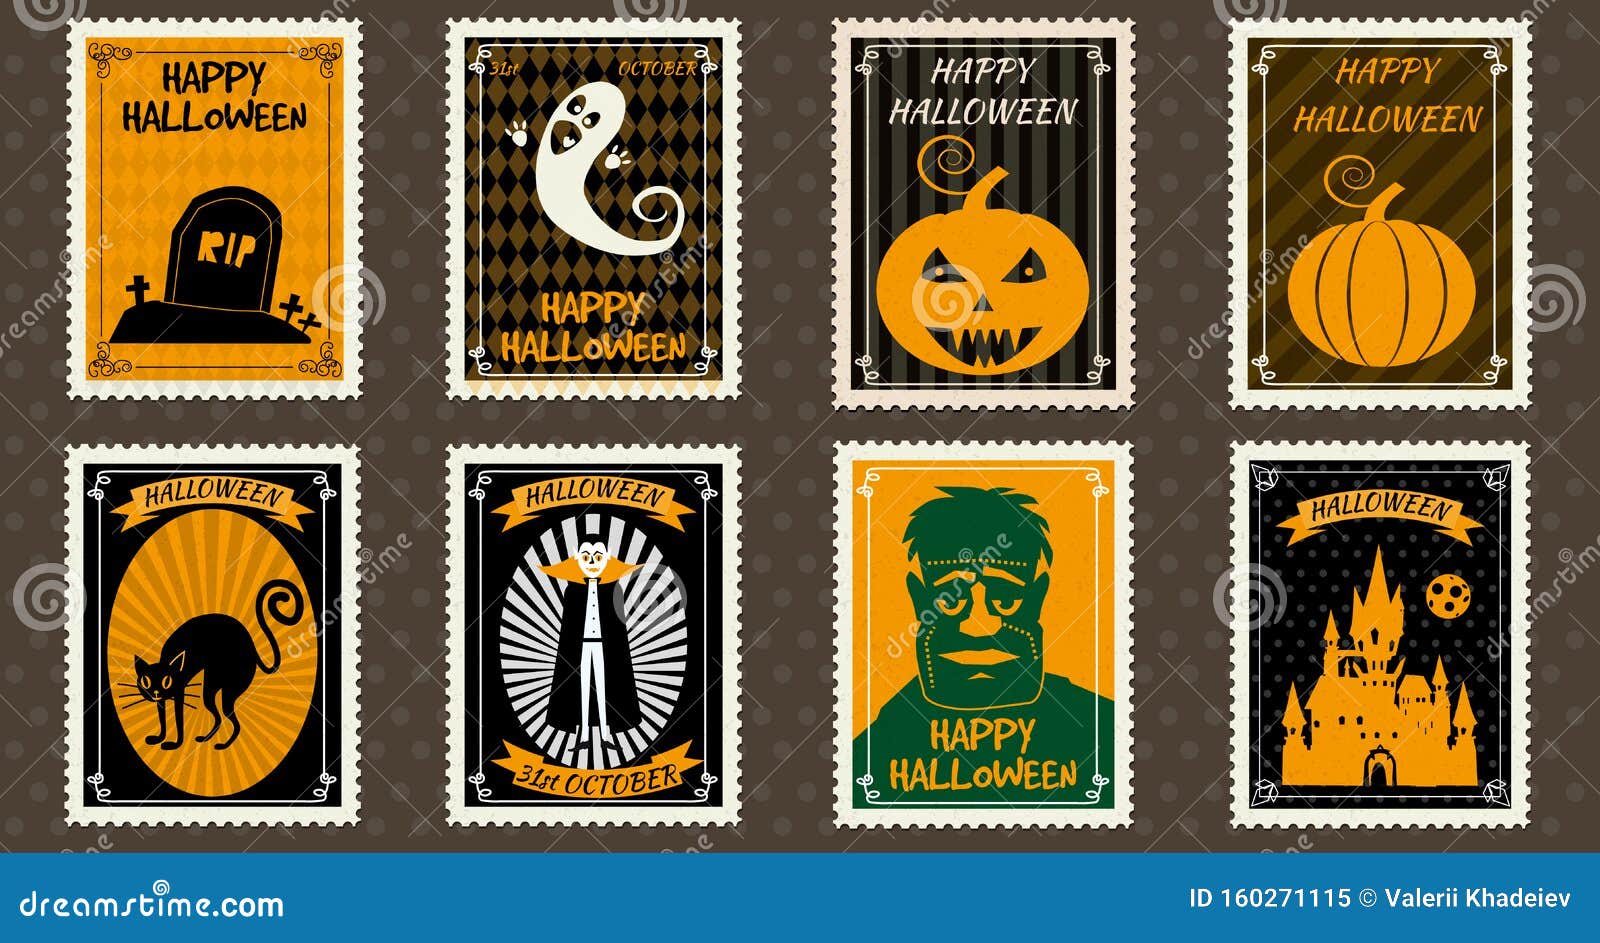 Happy Halloween Set Postage Stamps with Pumpkin, Ghost, Vampire, Zombie